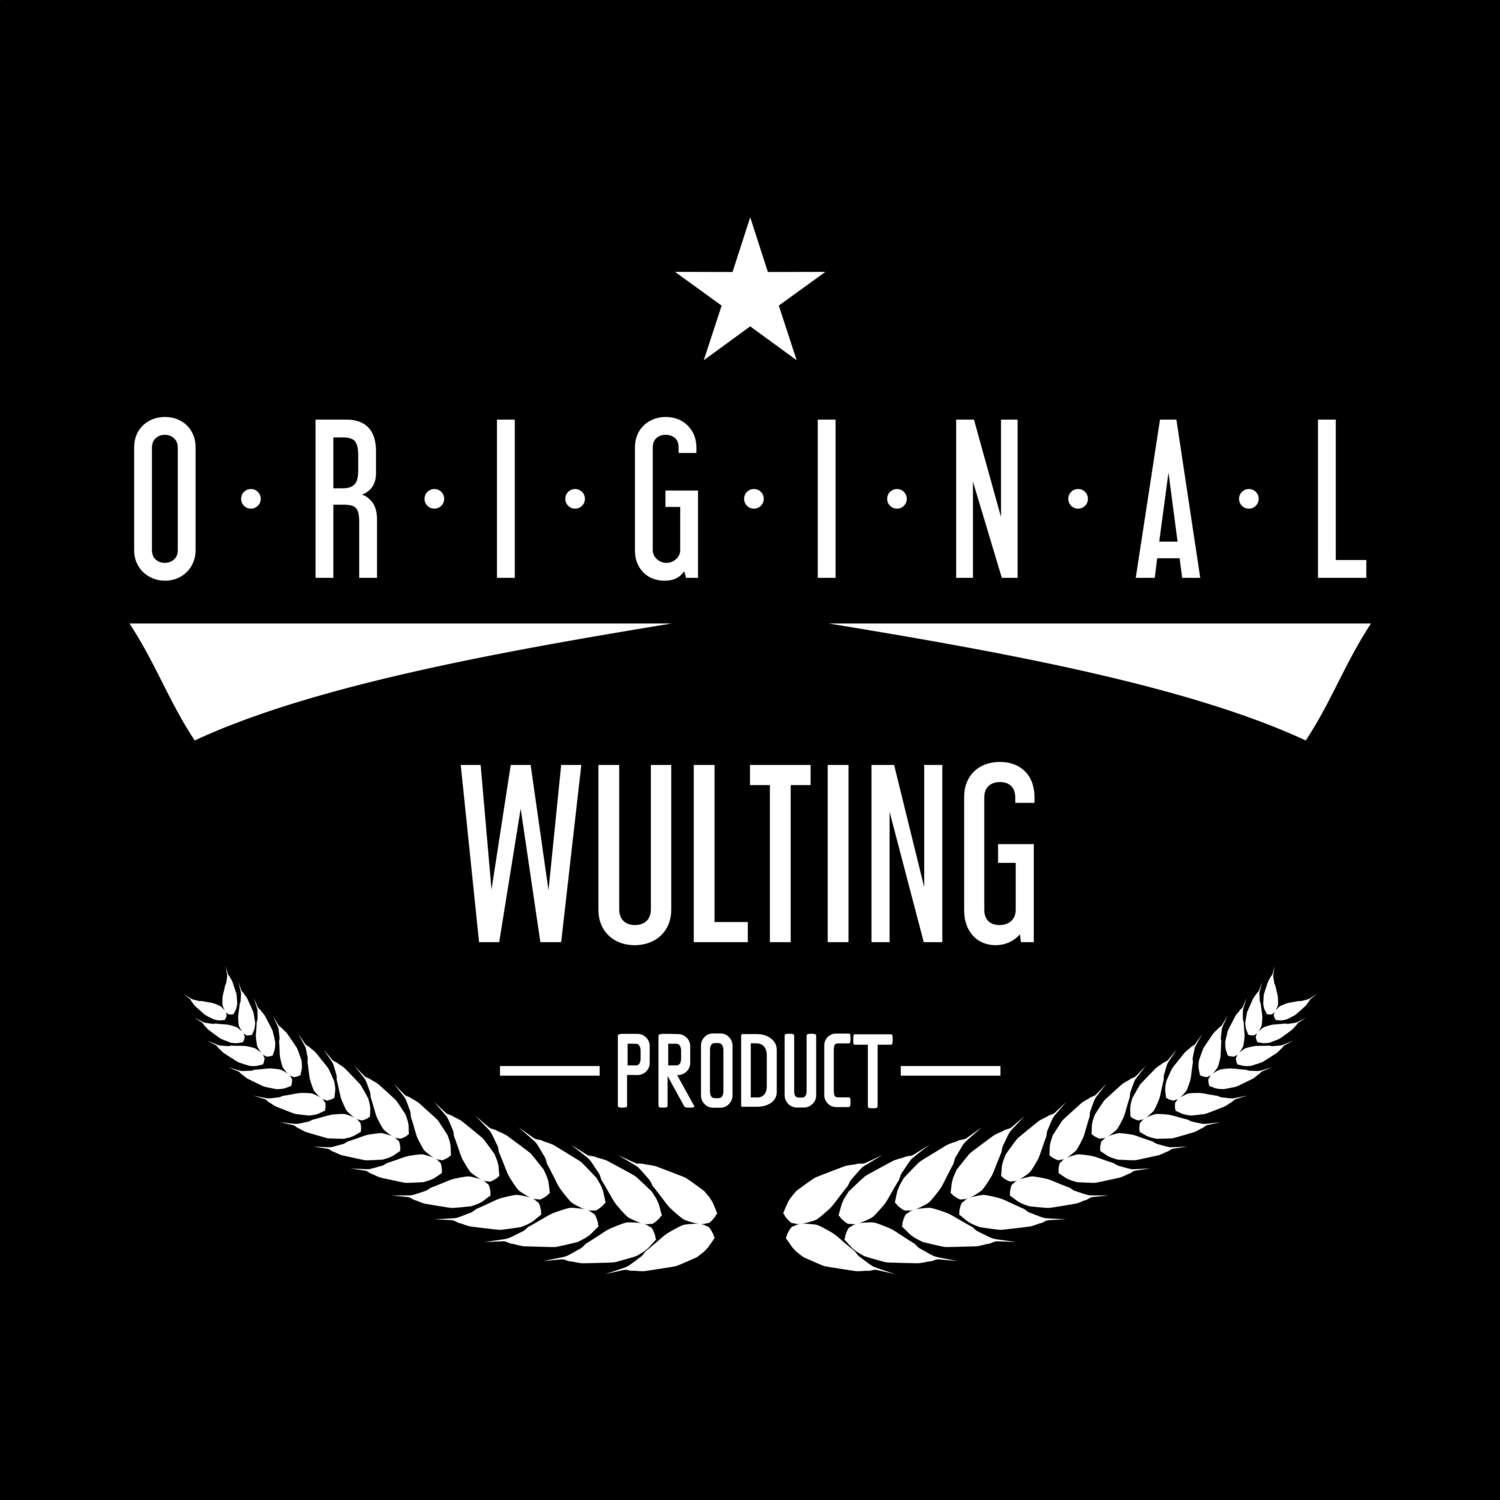 Wulting T-Shirt »Original Product«